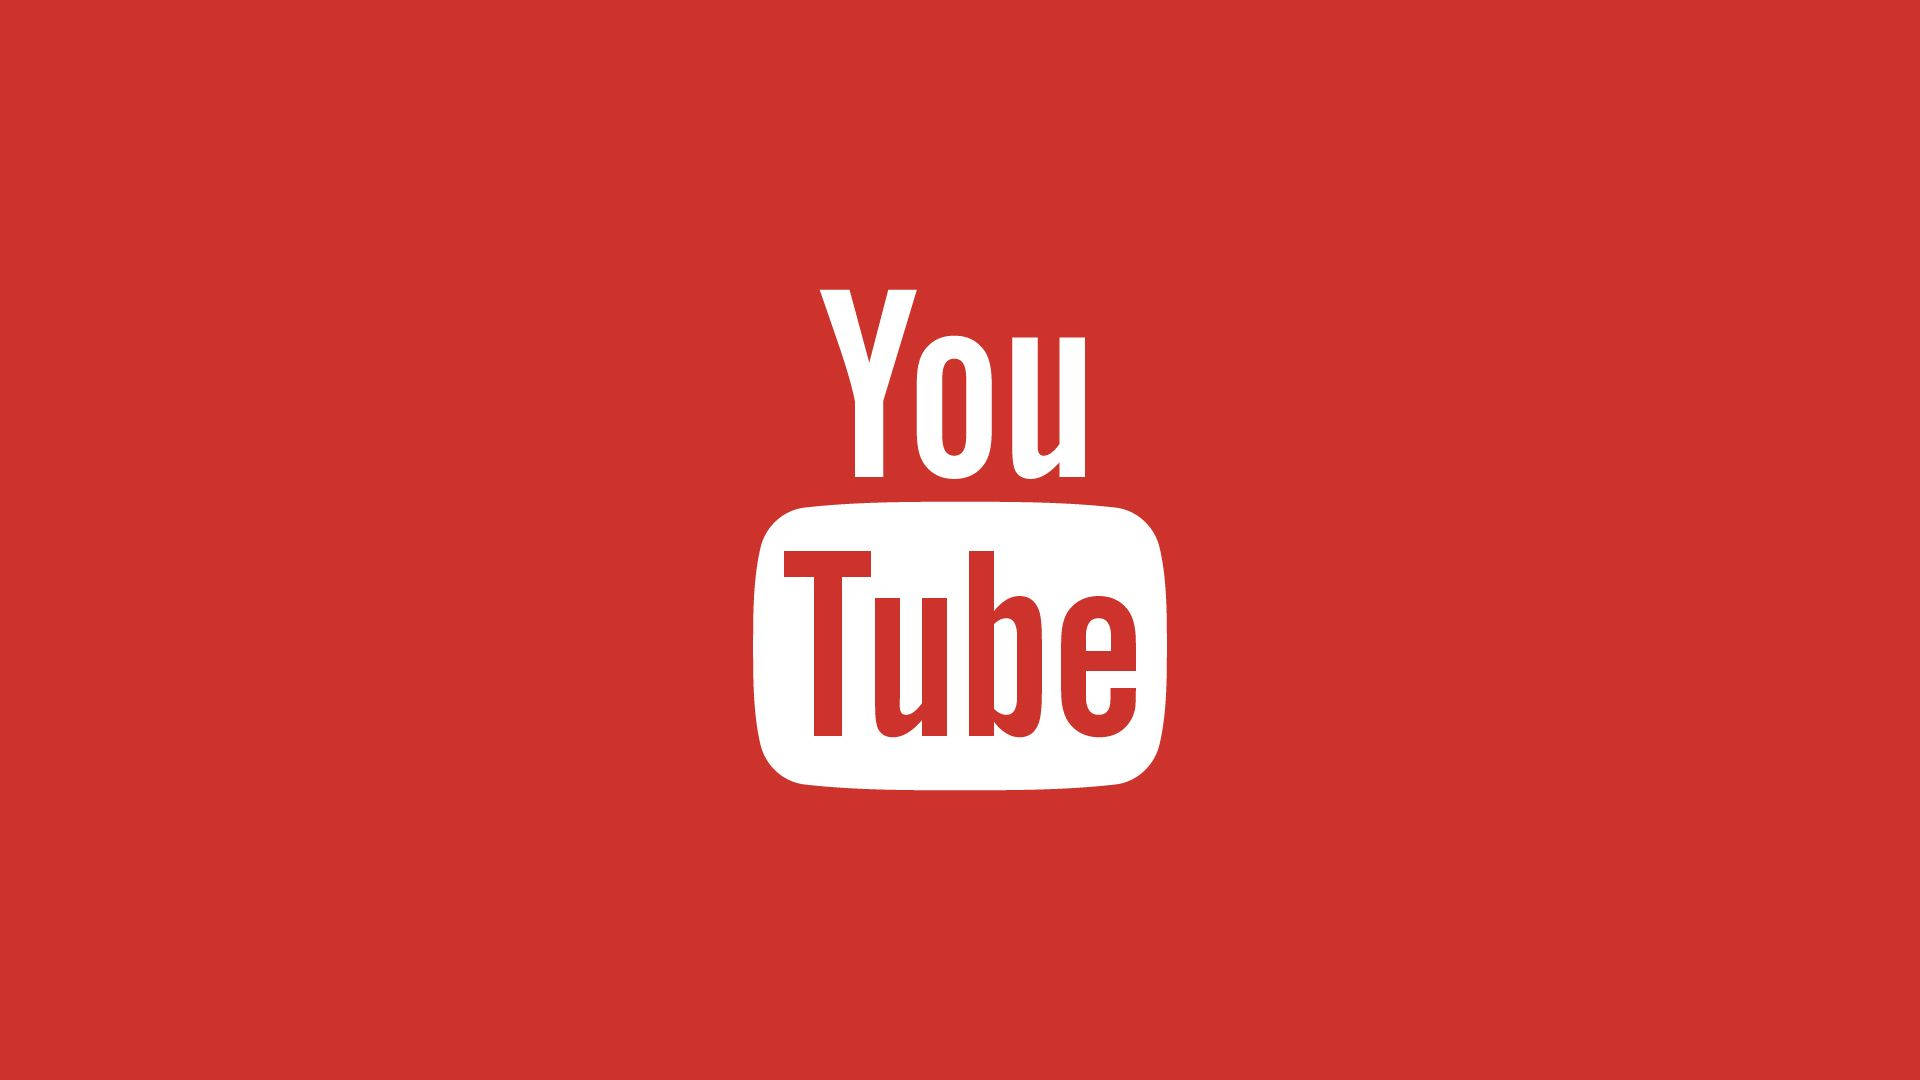 200+] Youtube Logo Wallpapers 